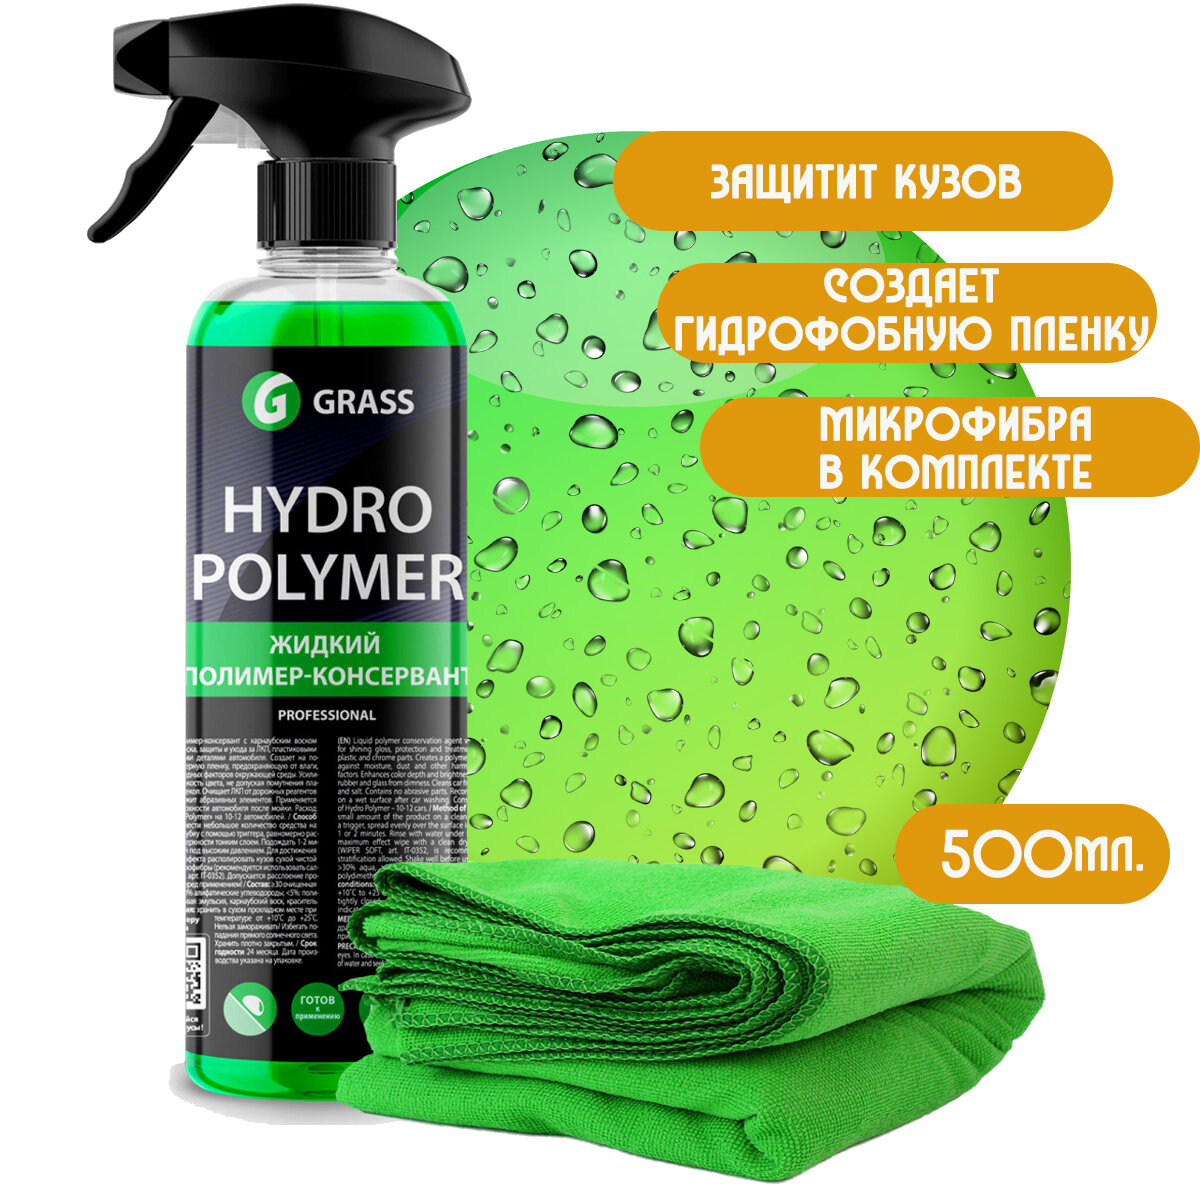 Жидкий полимер Grass Hydro polymer professional (флакон 500 мл) и две салфетки из микрофибры